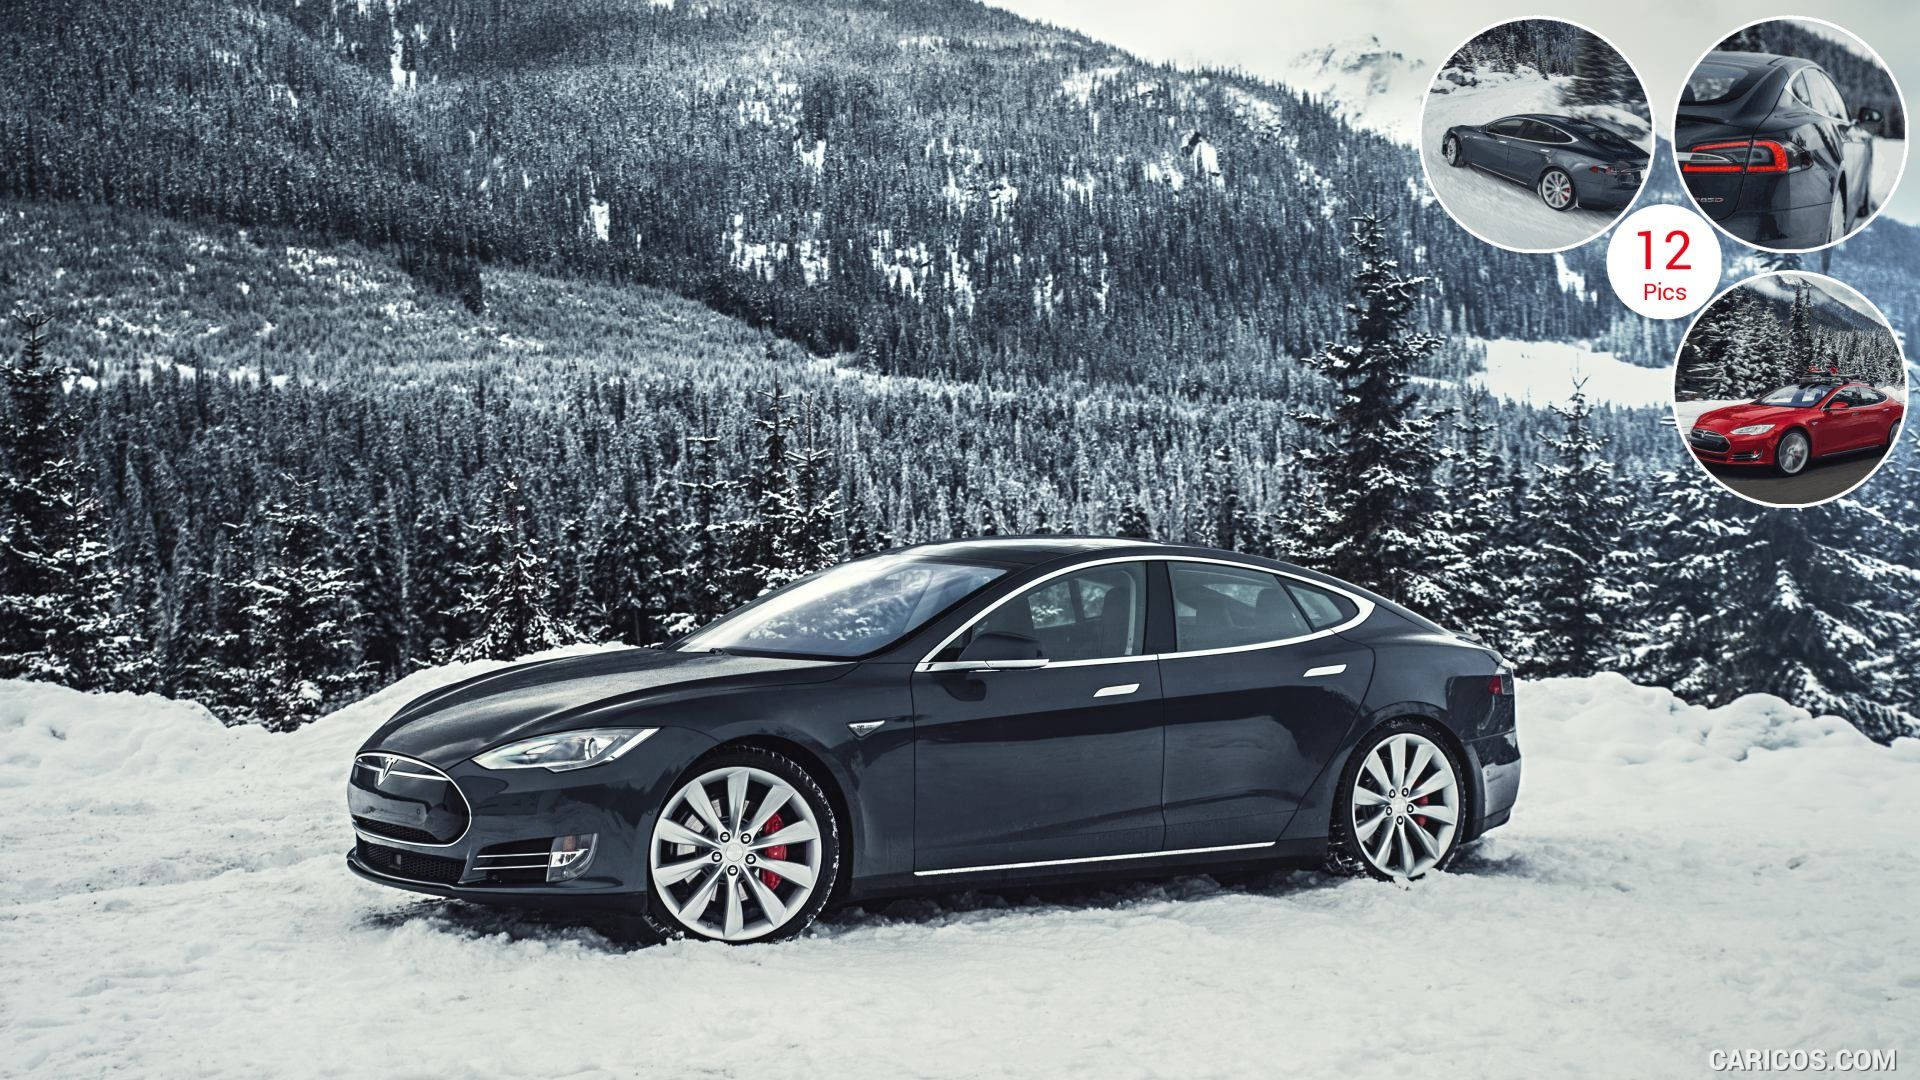 Tesla Model S 85D Winter Wallpaper